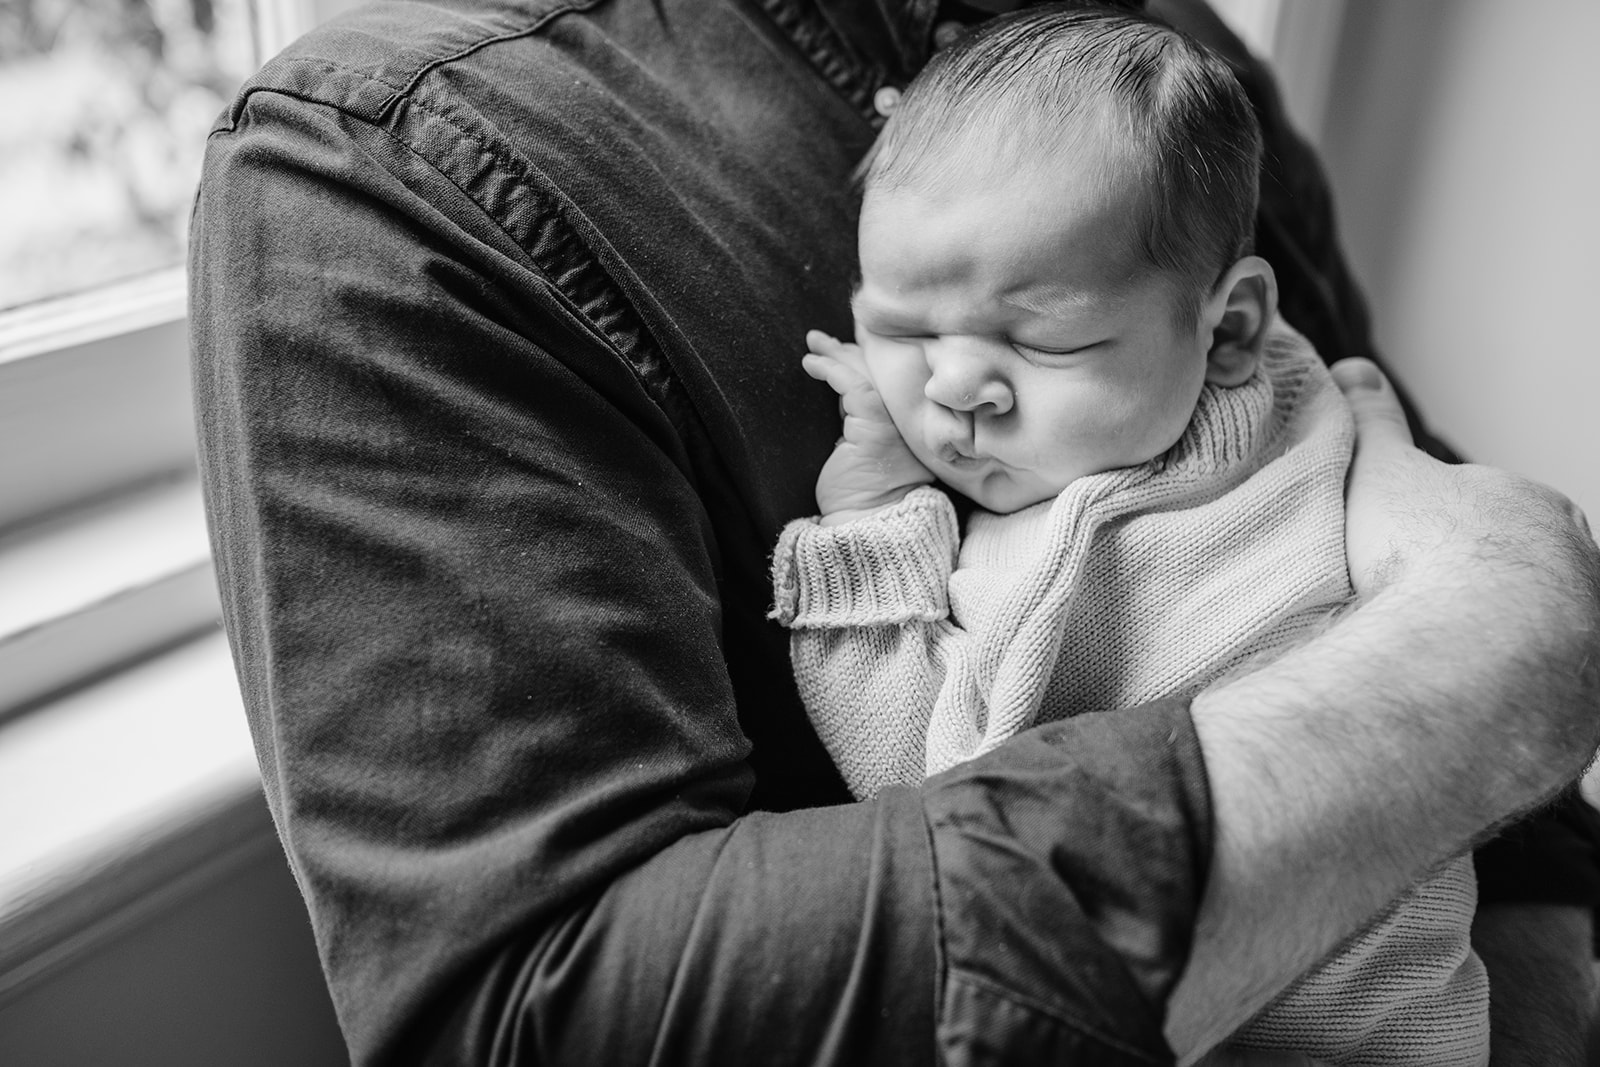 newborn cuddles into dad, black and white baby asleep